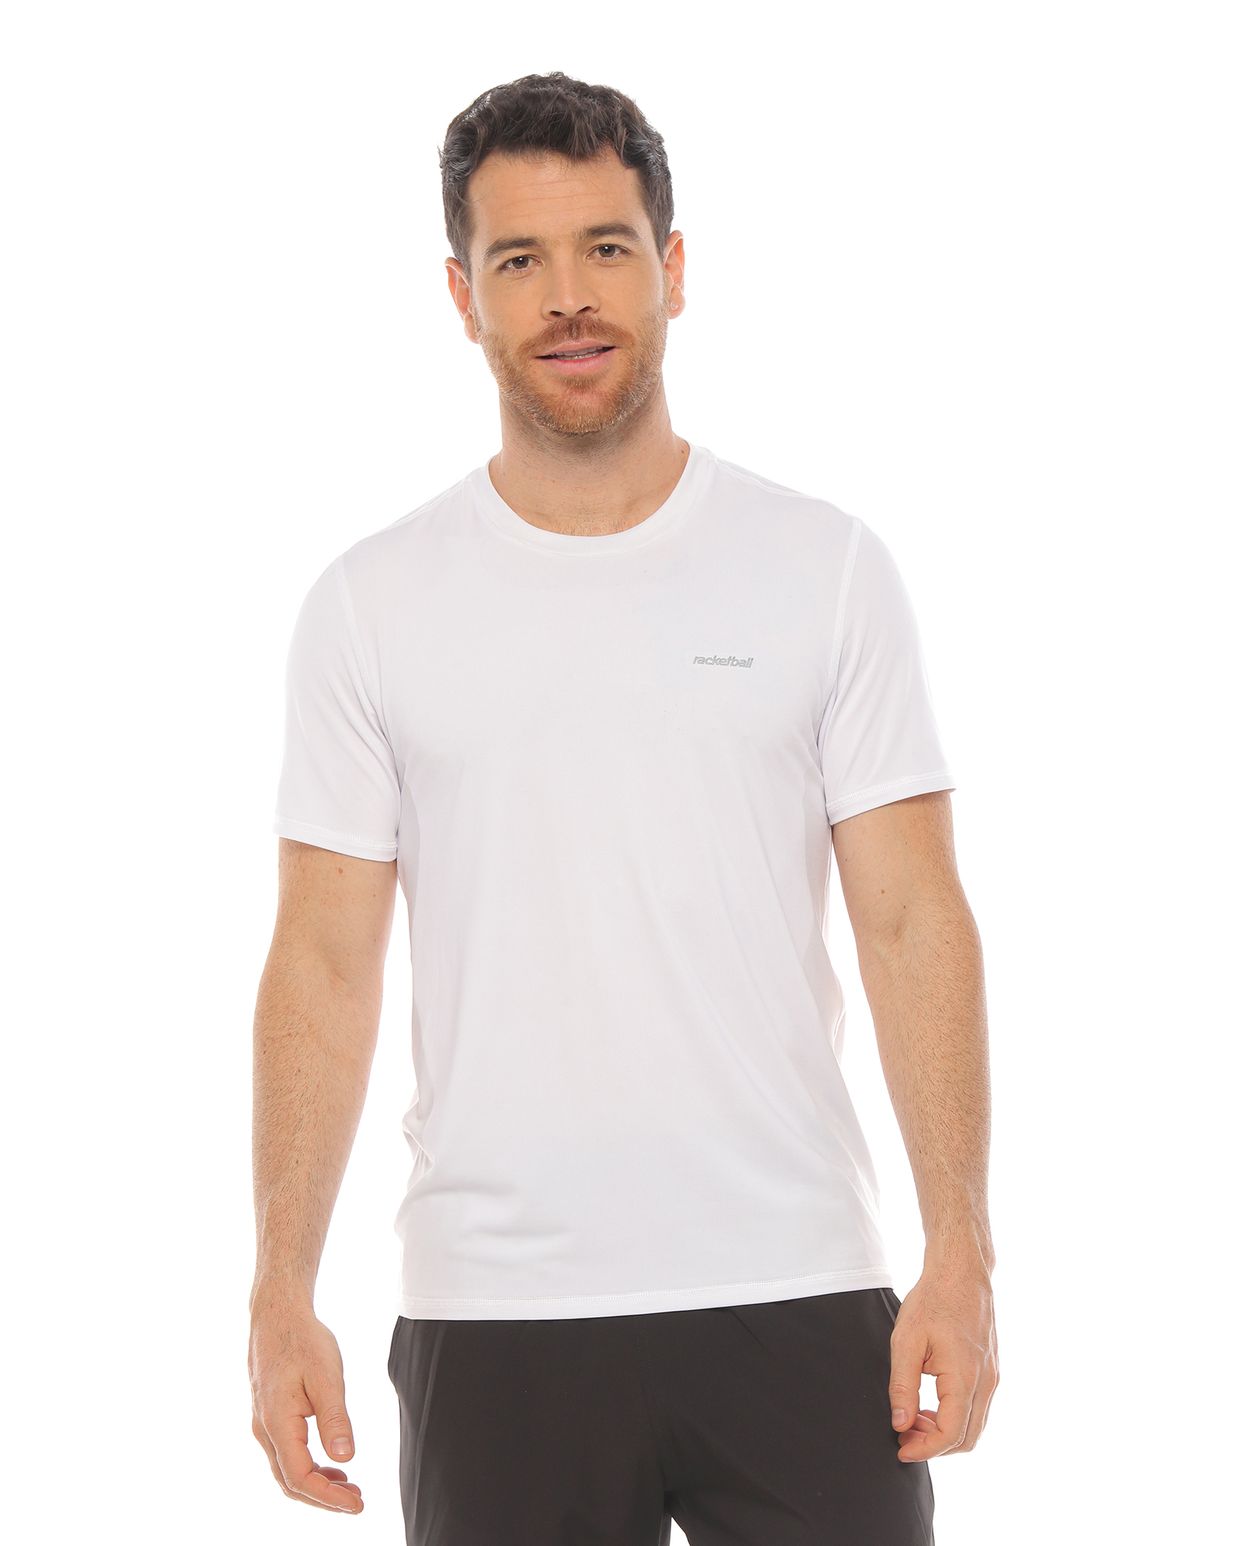 Oblicuo lotería Simetría Camiseta deportiva hombre, color blanco - racketball movil